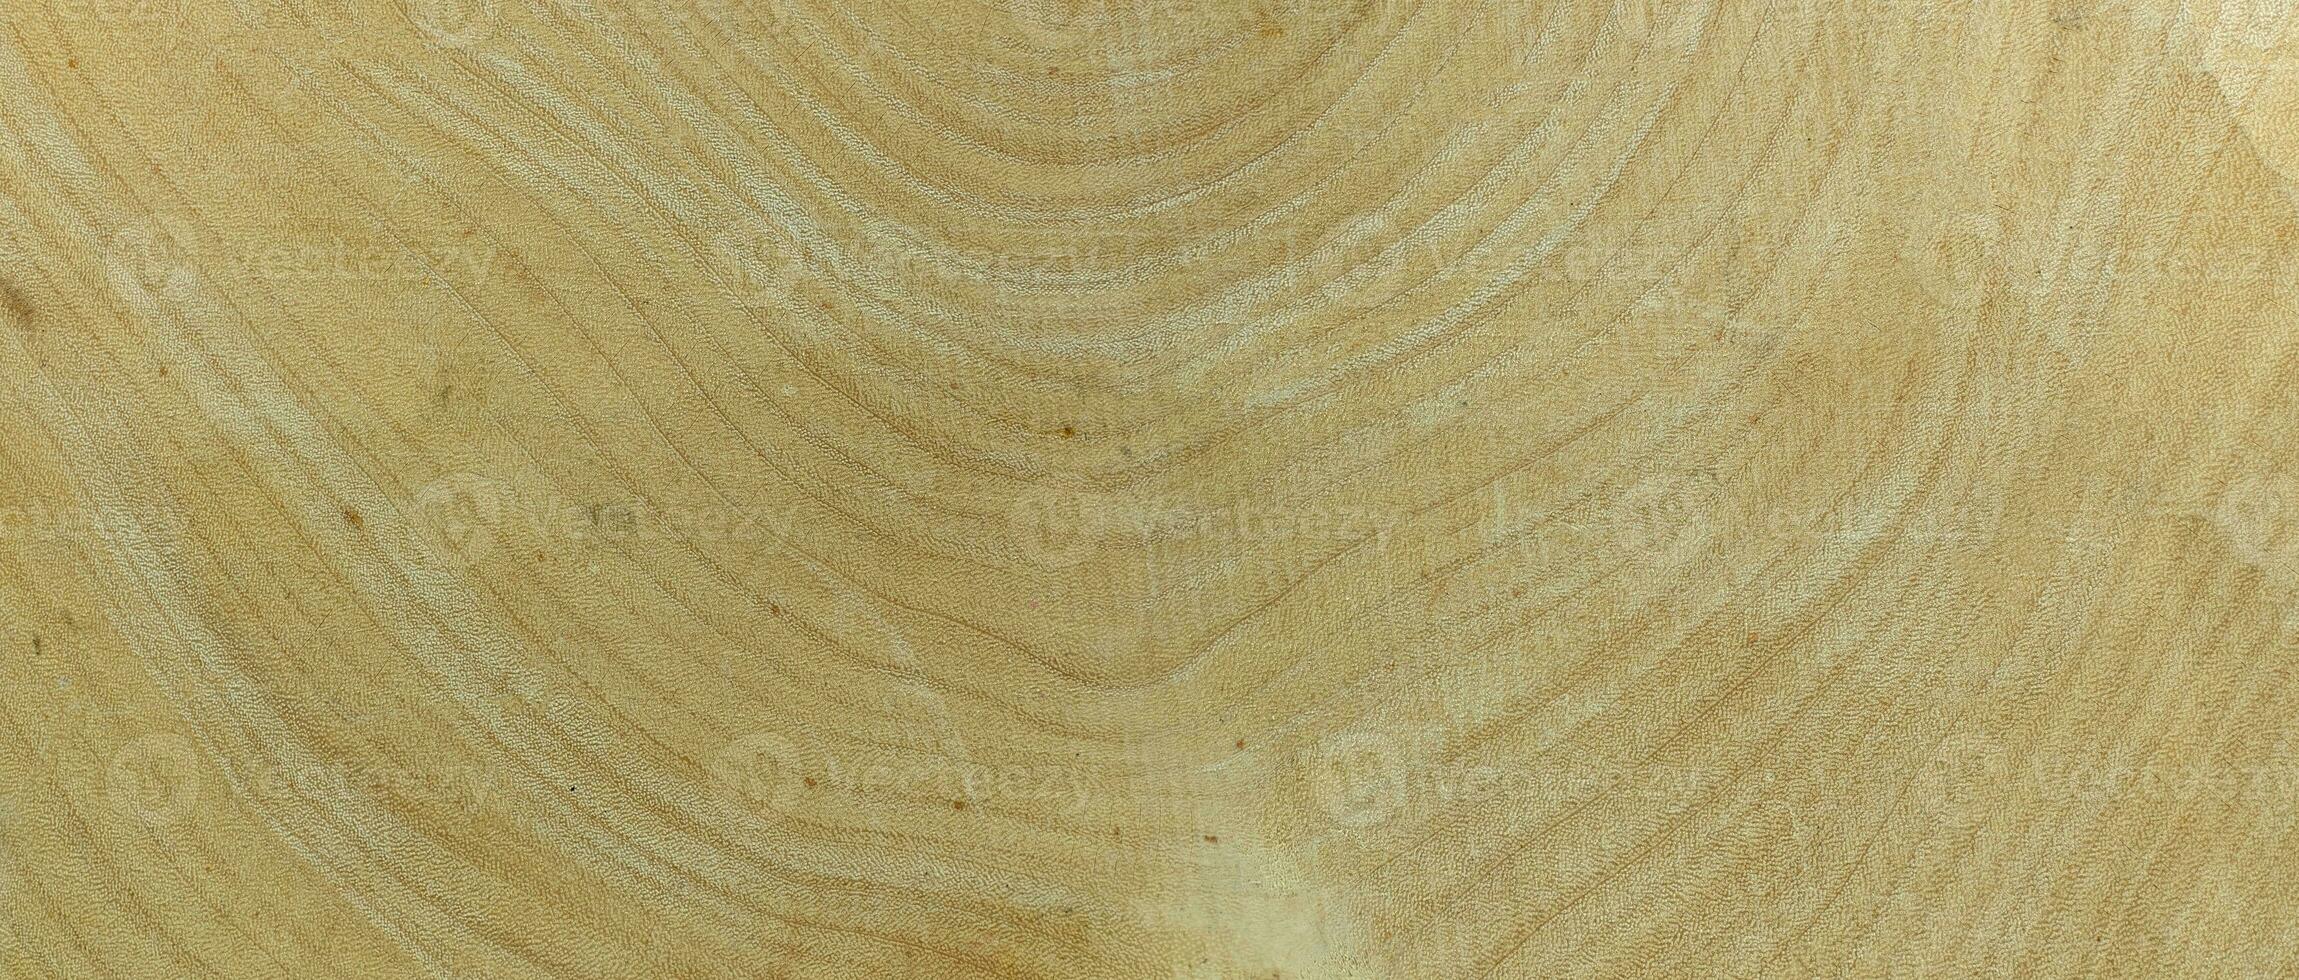 anel anual de madeira de tamarindo para textura de fundo foto